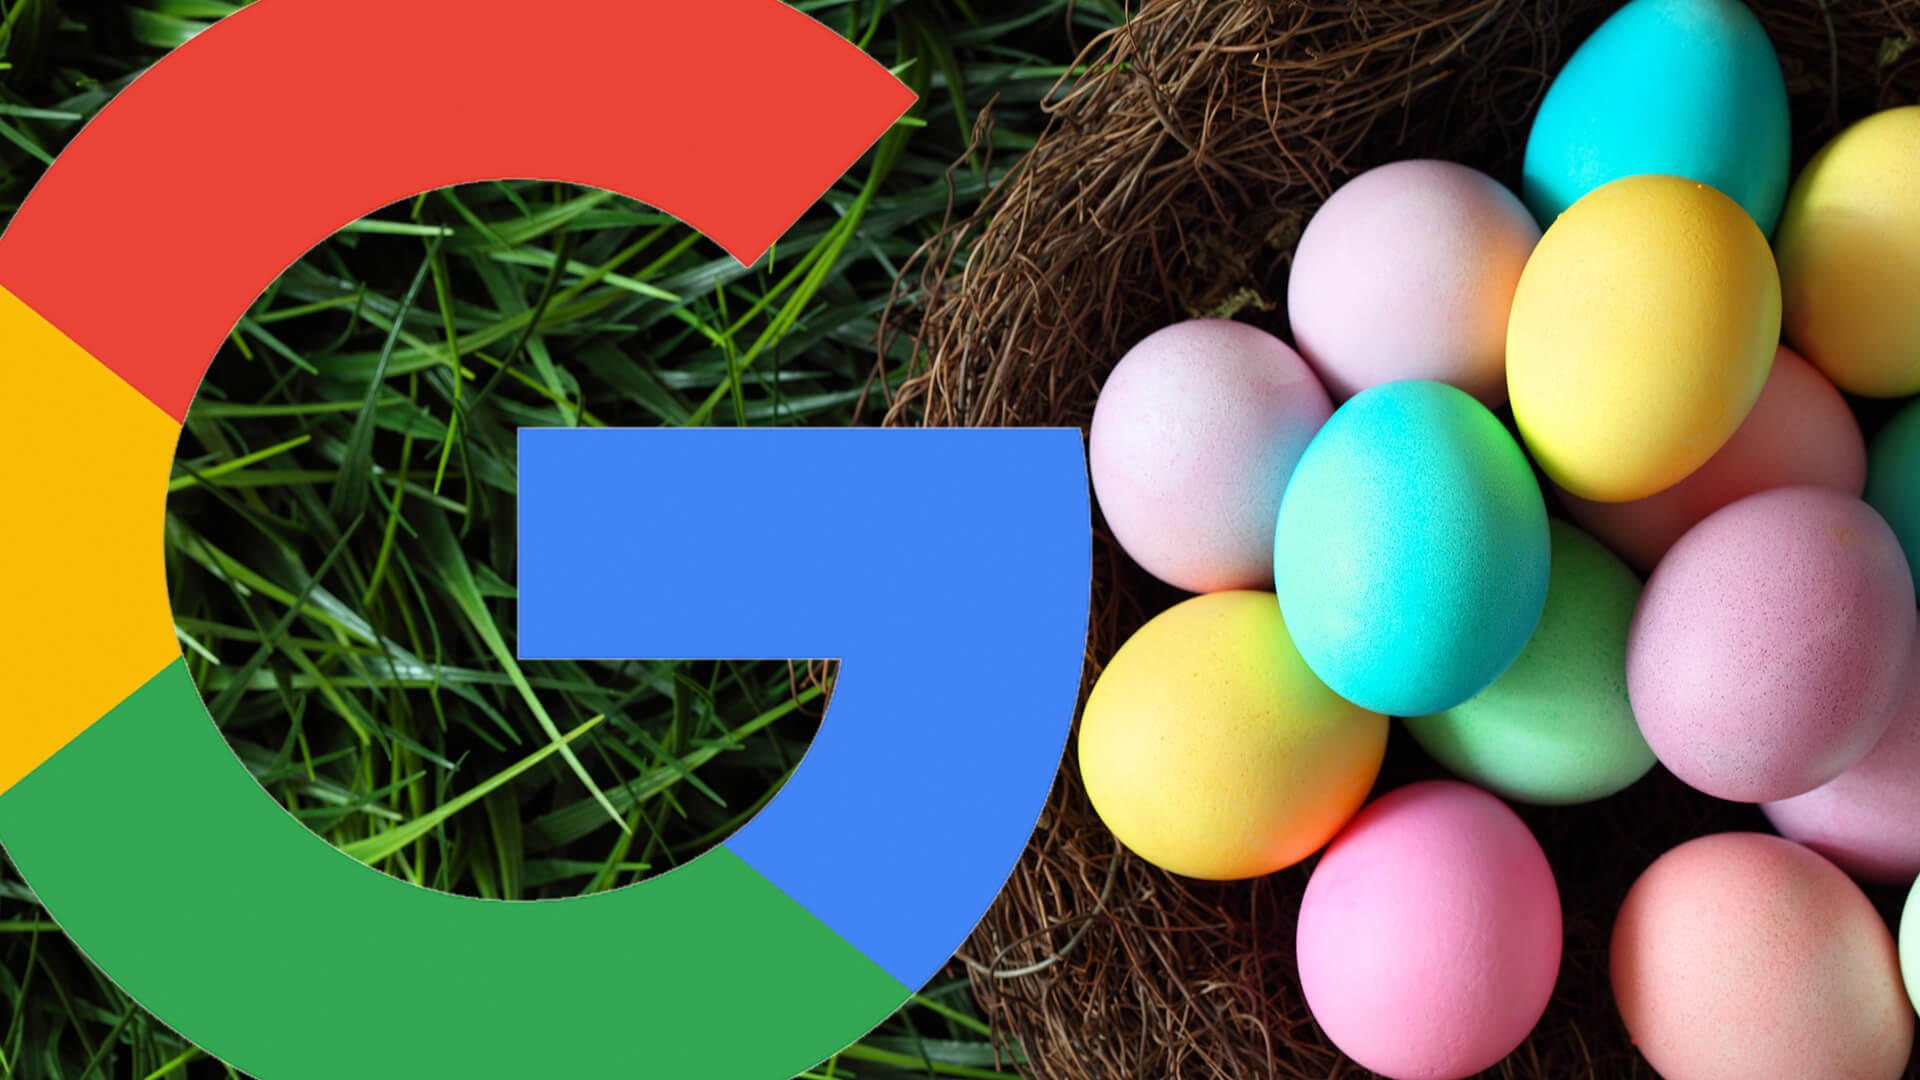 Google Easter Eggs : r/MoonPissing